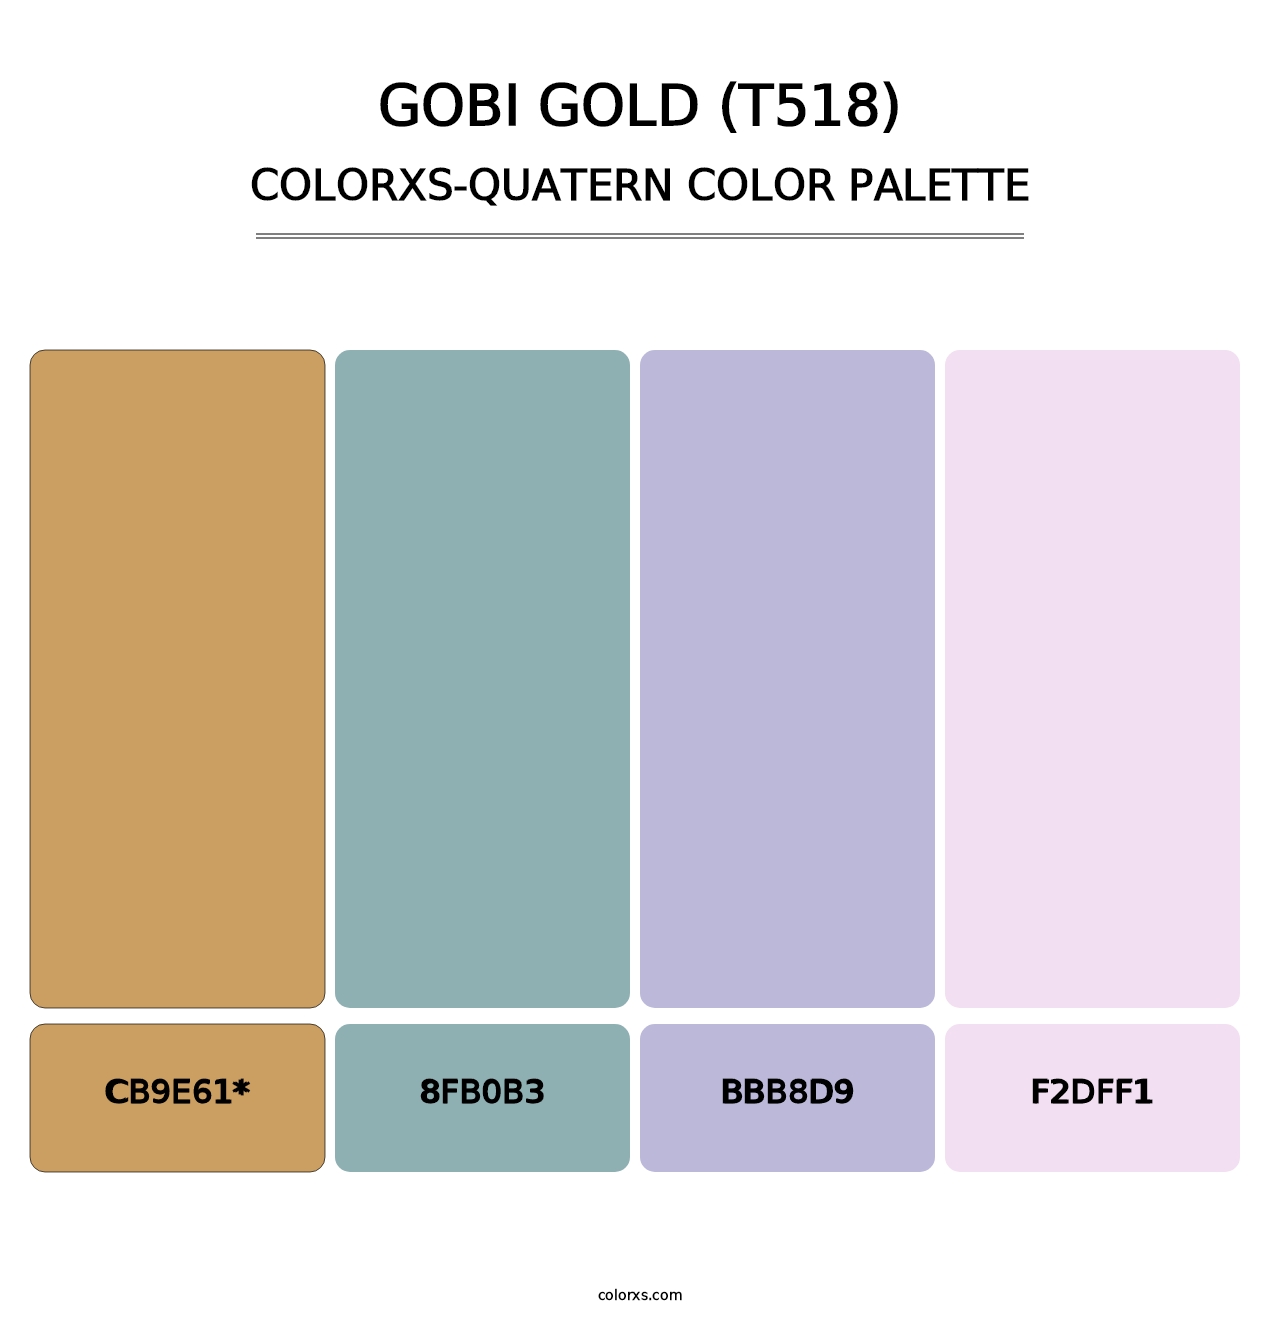 Gobi Gold (T518) - Colorxs Quatern Palette